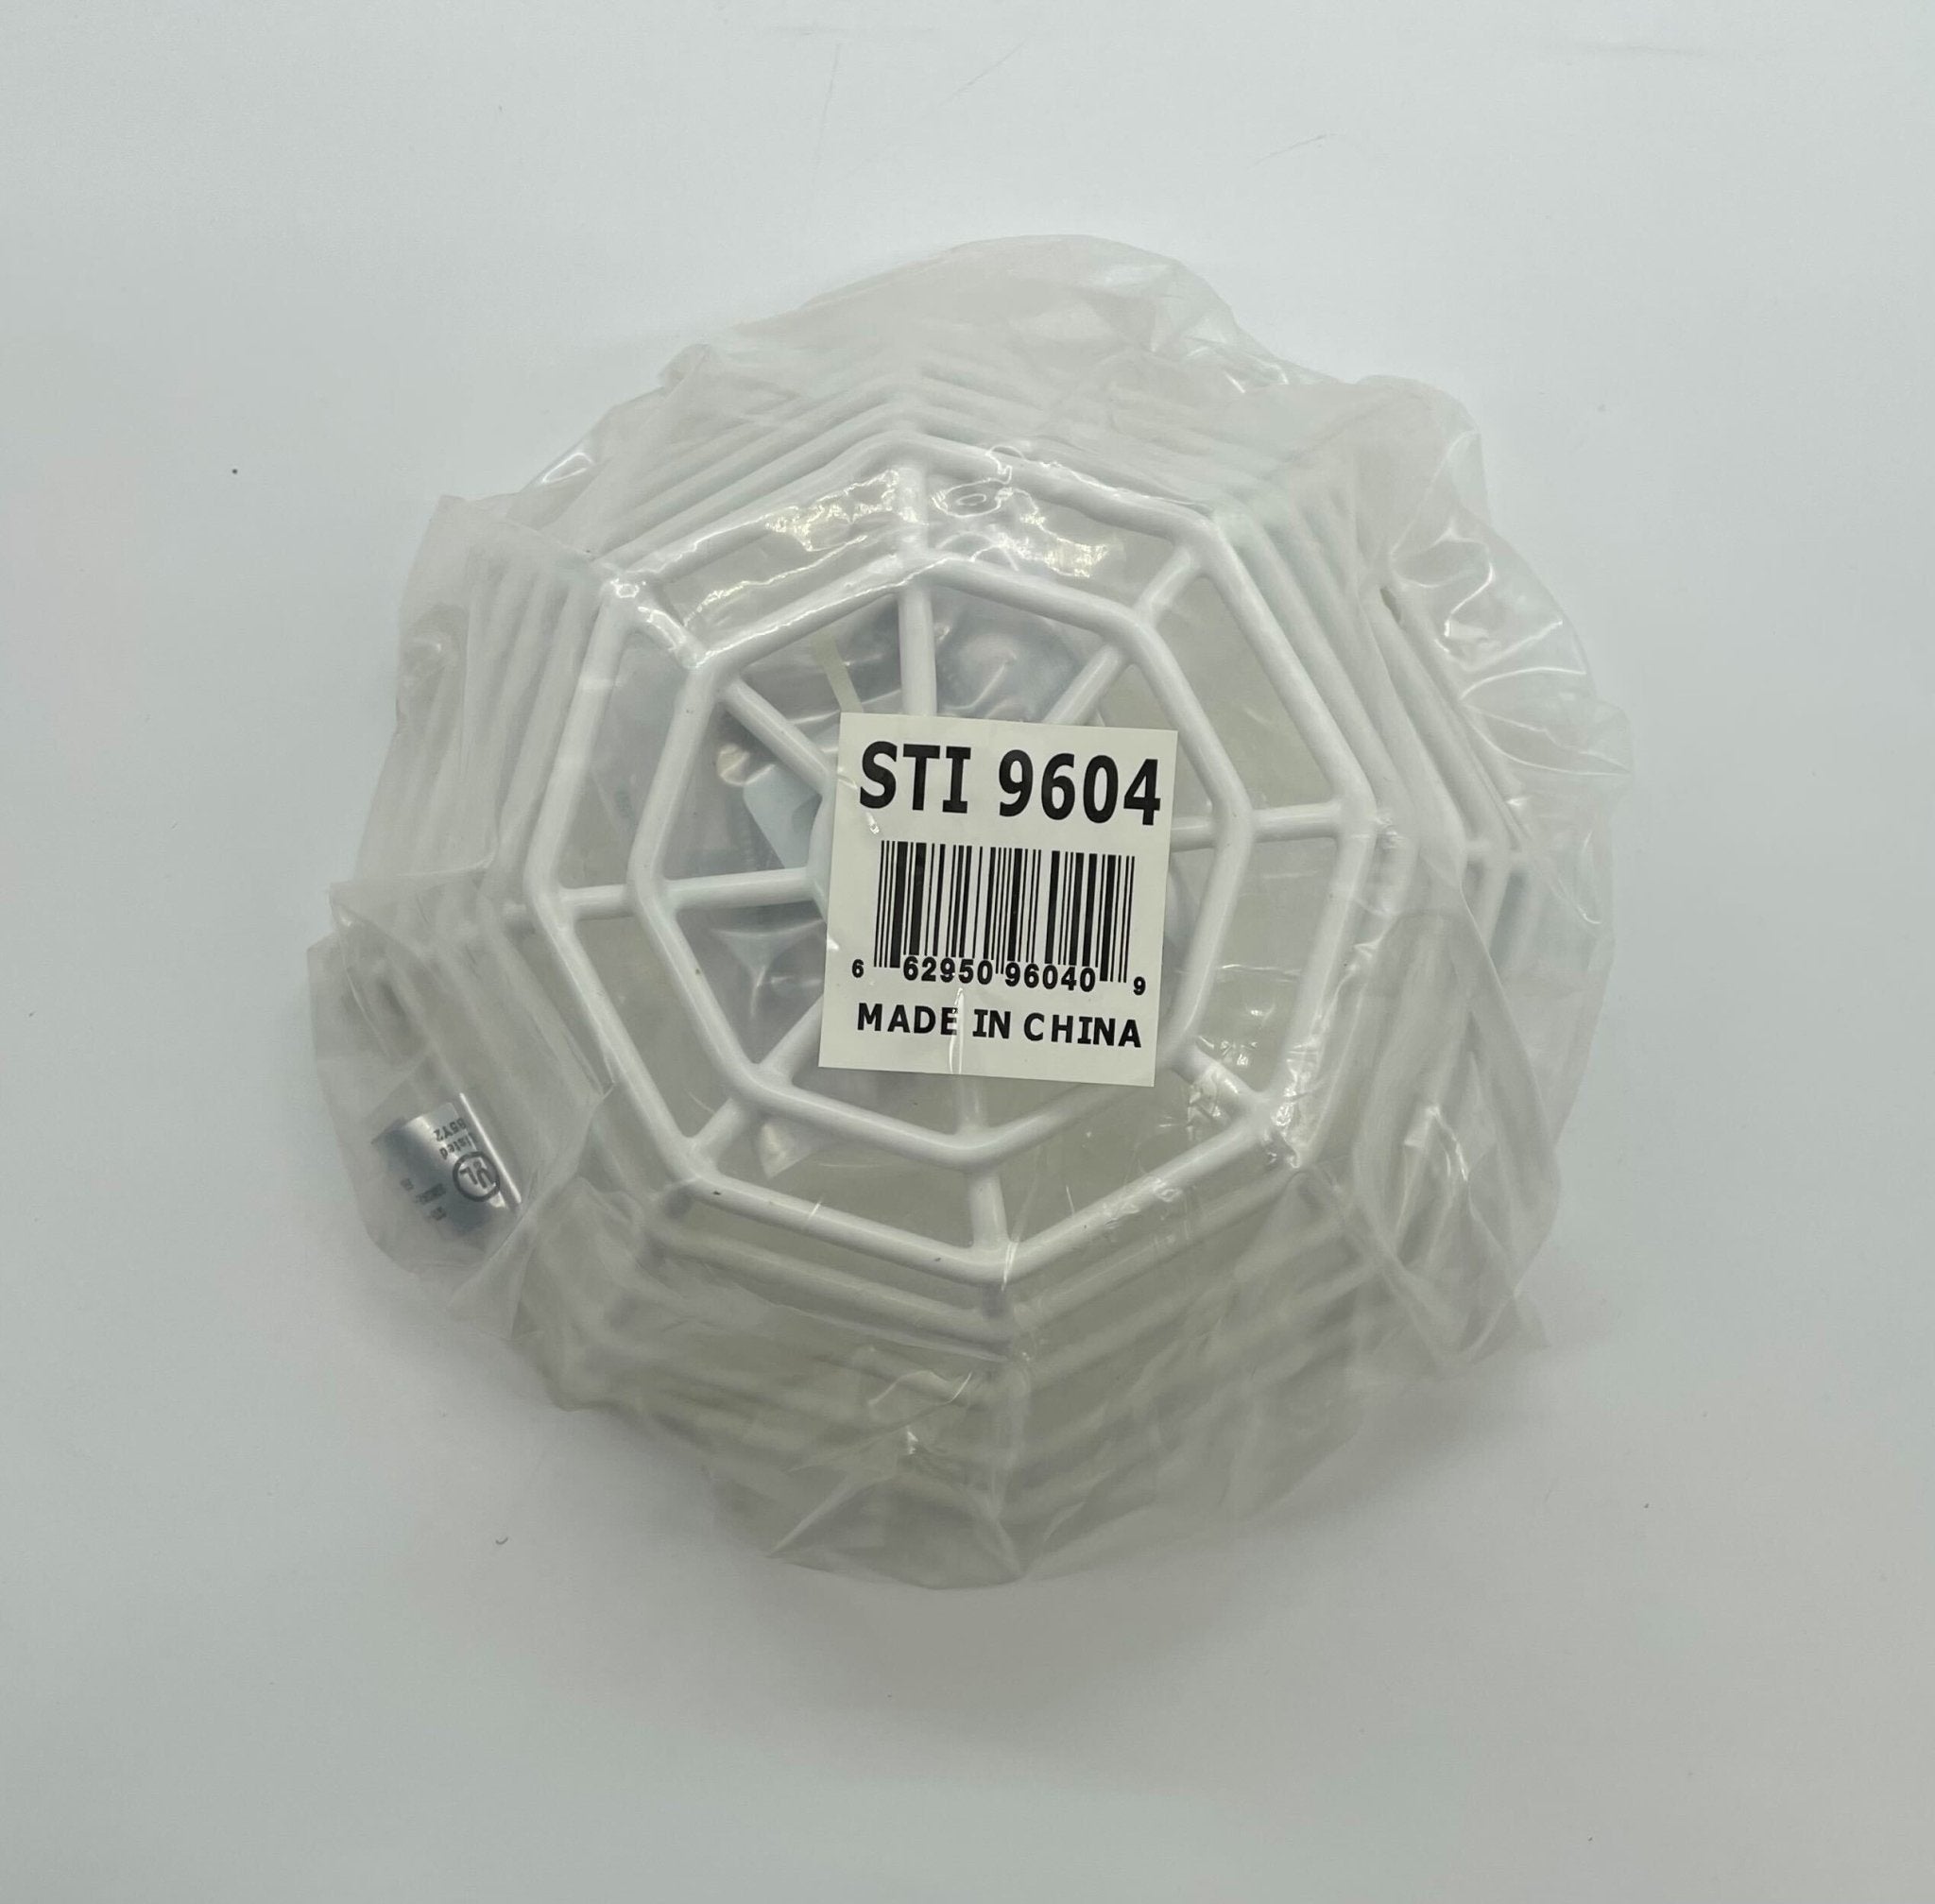 STI-9604 Web Stopper, Flush Mount - The Fire Alarm Supplier